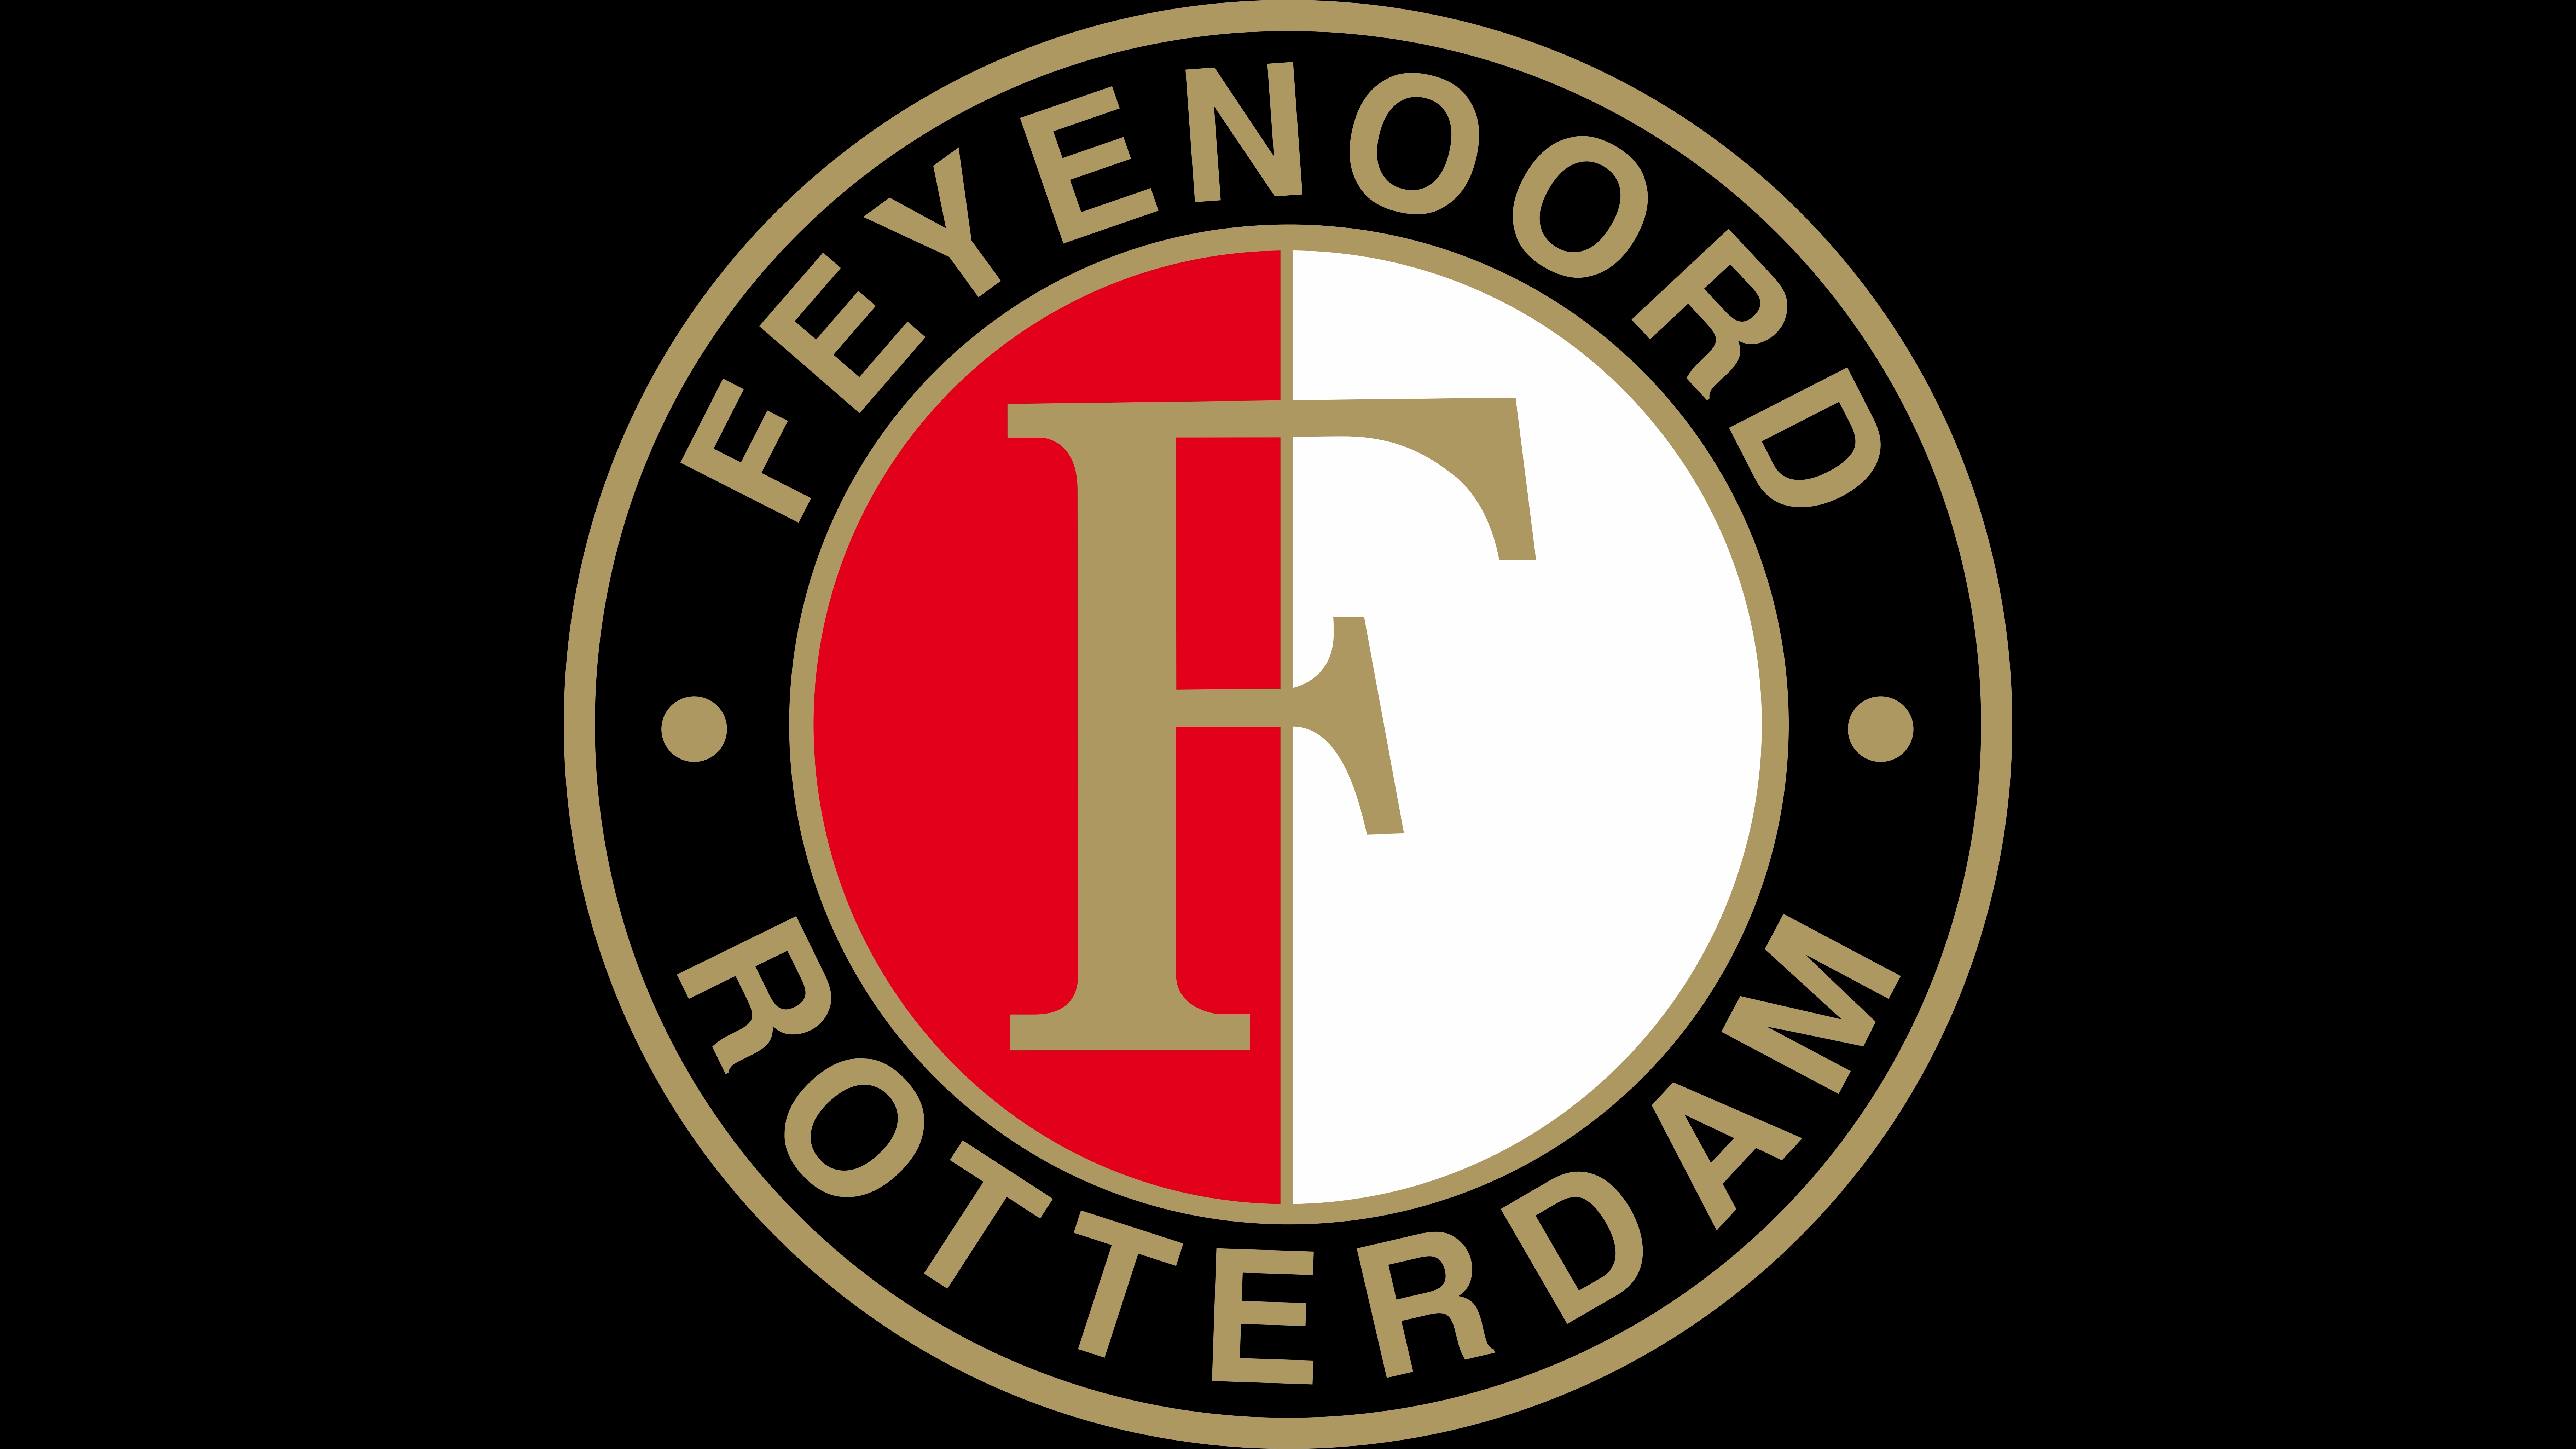 Télécharger des fonds d'écran Feyenoord HD